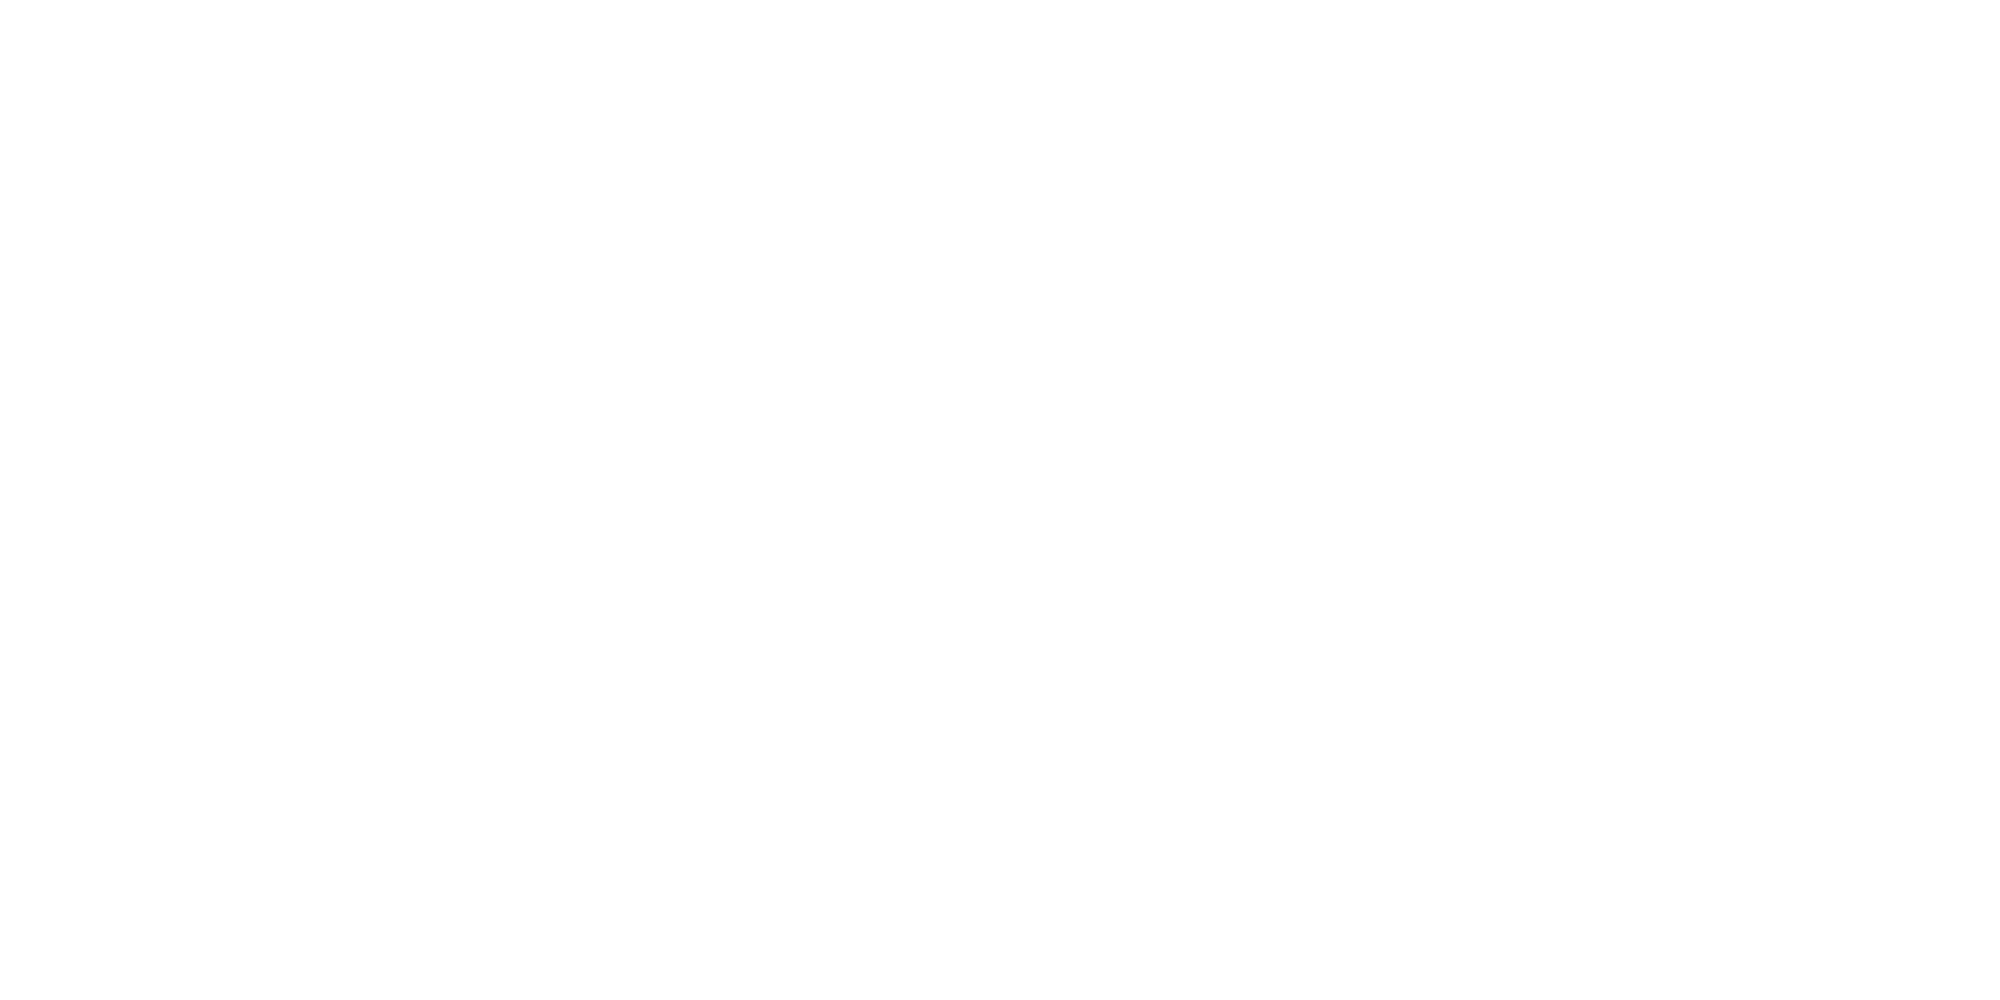 STEVEN HACKER PRODUCTIONS